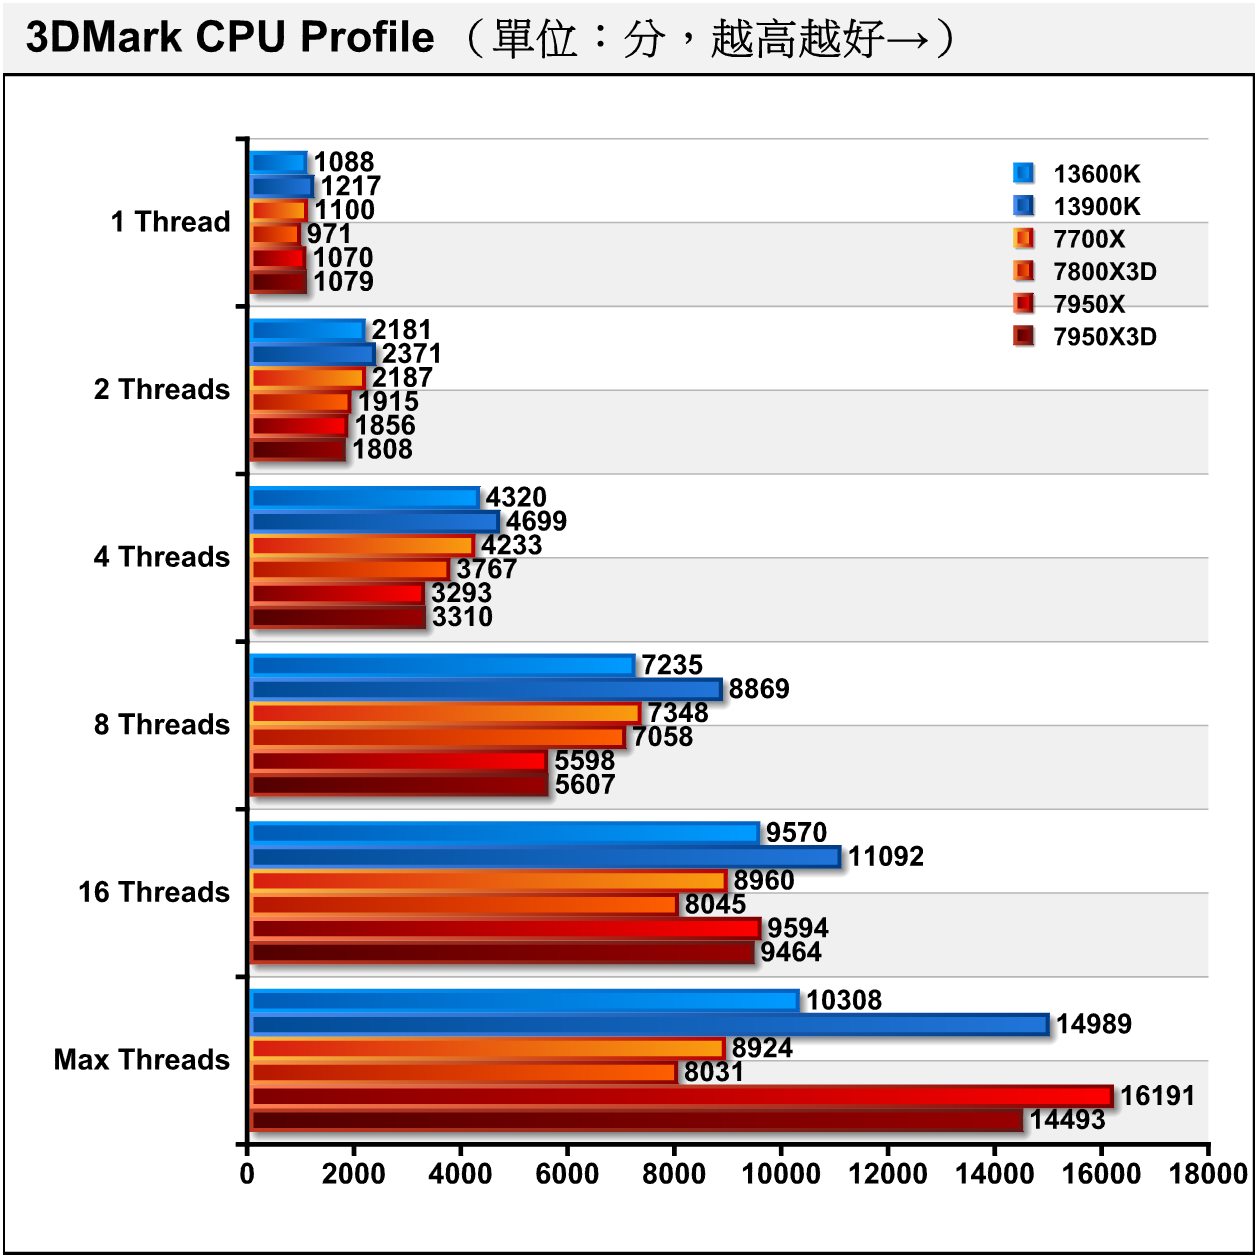 3DMark CPU Profile處理器多工測試能夠看出同處理器在不同負載的效能表現，7800X3D因時脈低於7700X，在不同執行緒皆些微落後。